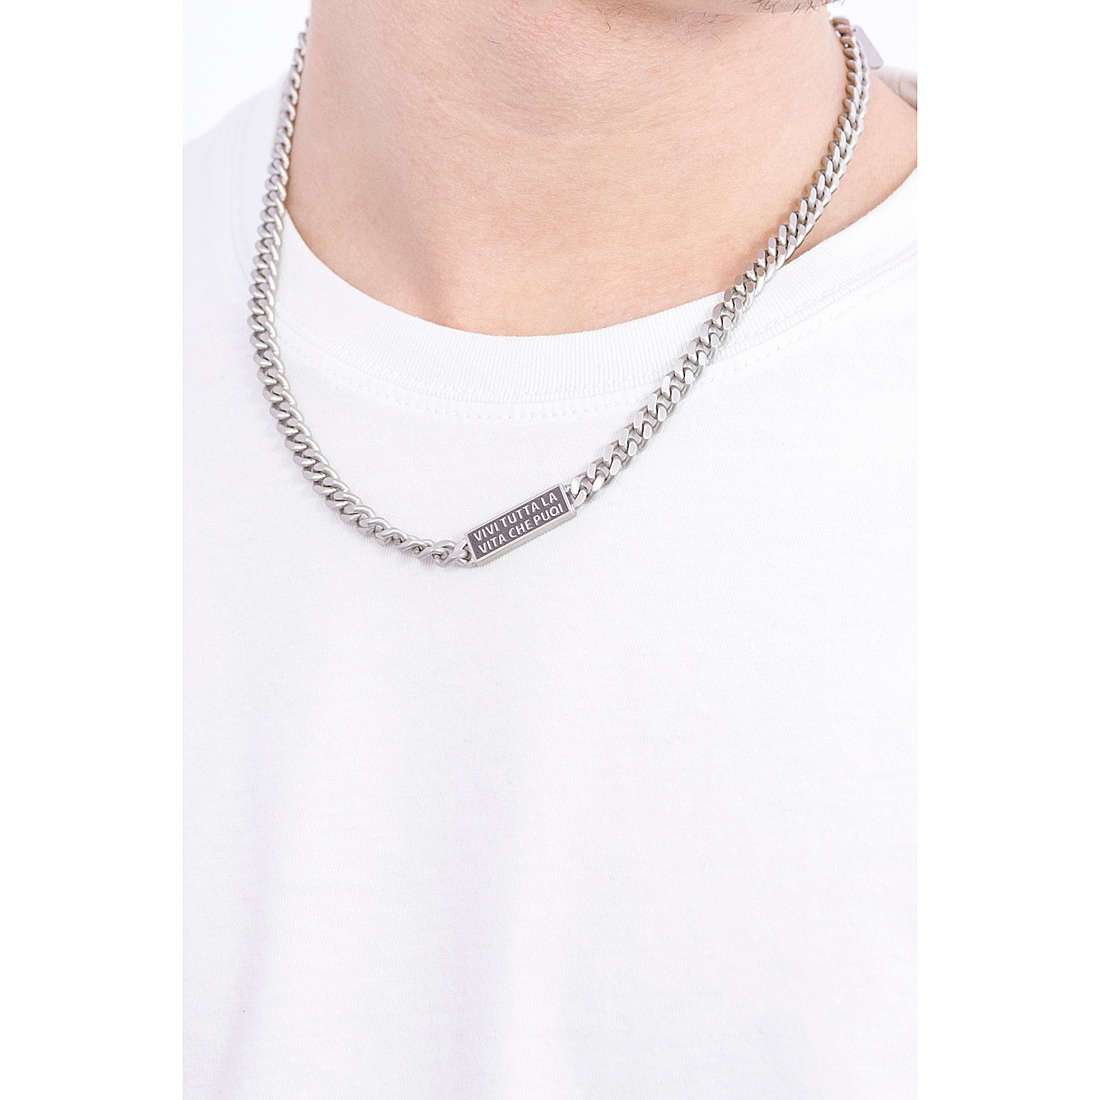 Kidult necklaces Philosophy man 751191 wearing